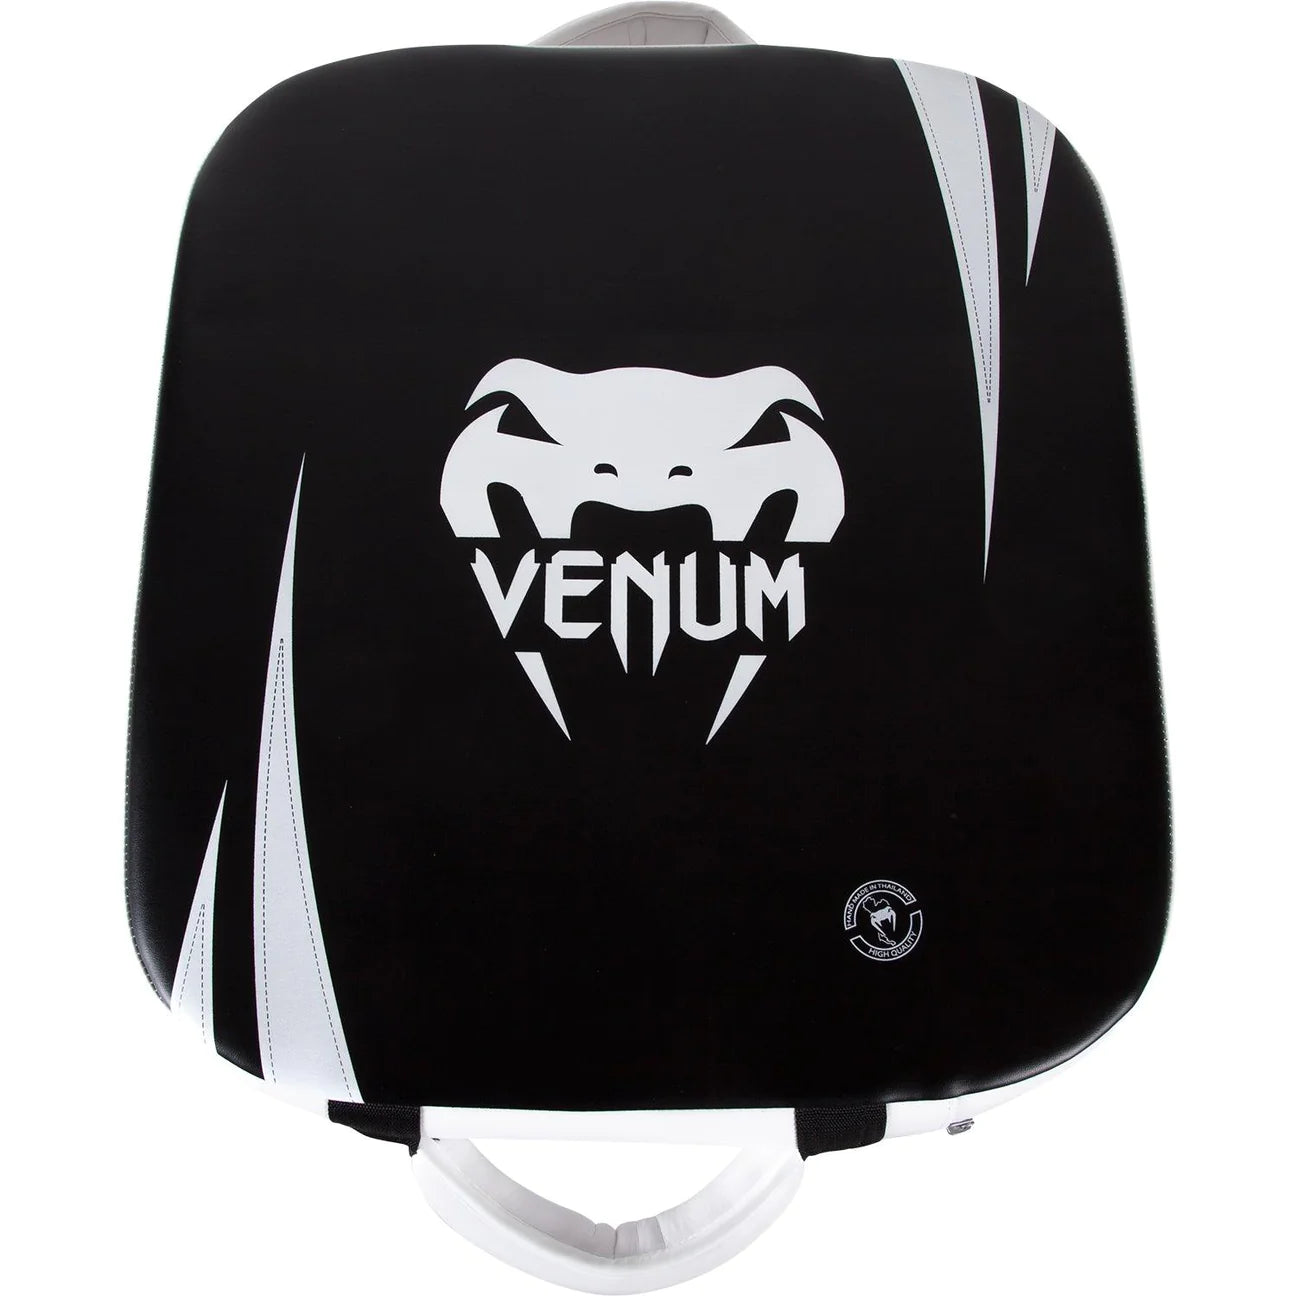 Venum - Absolute Square Kick Shield - Skintex Leather